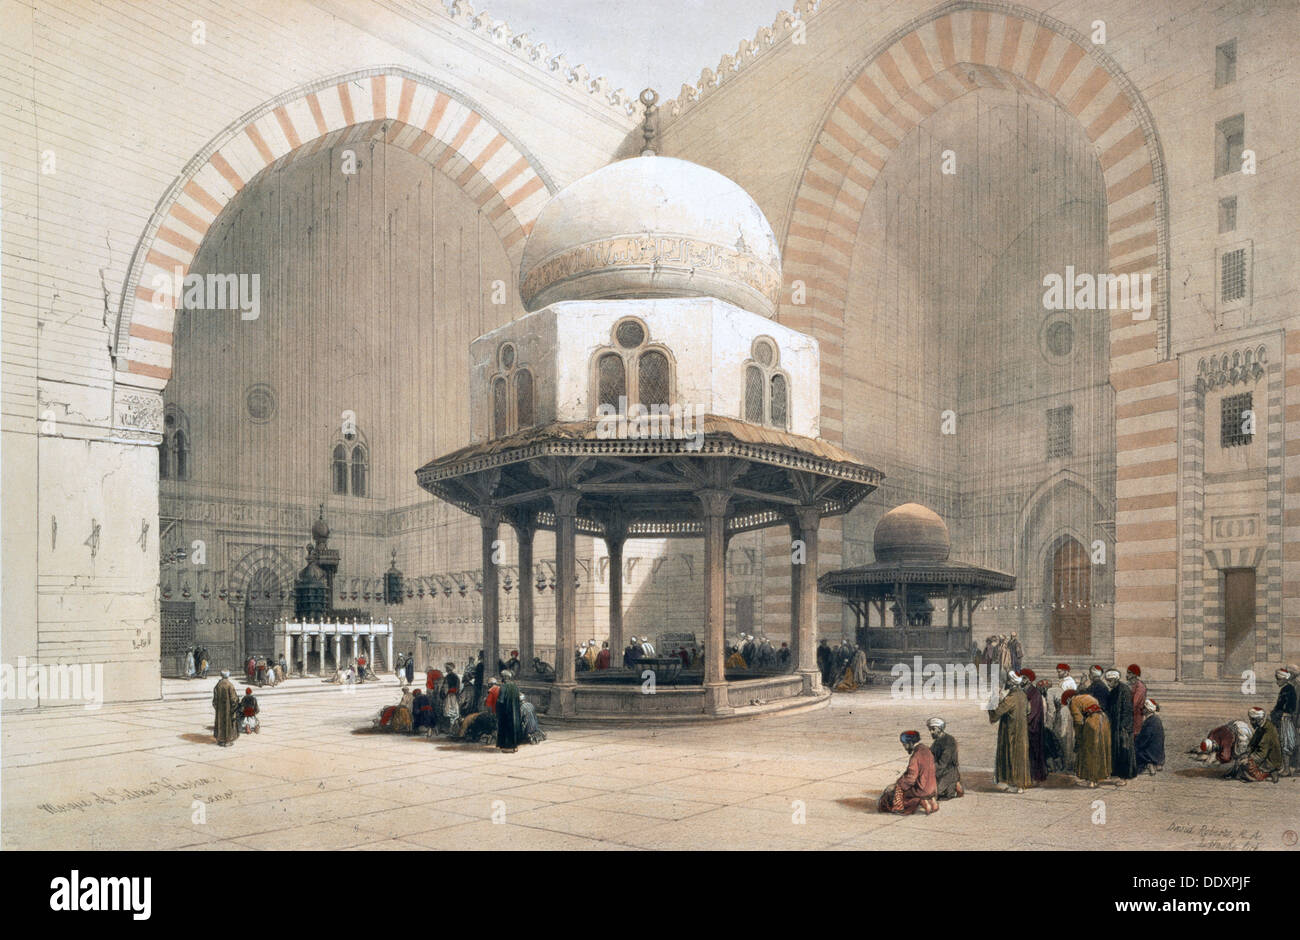 Interior of the Mosque of the Sultan al-Ghuri, Cairo, Egypt, 19th century. Artist: David Roberts Stock Photo